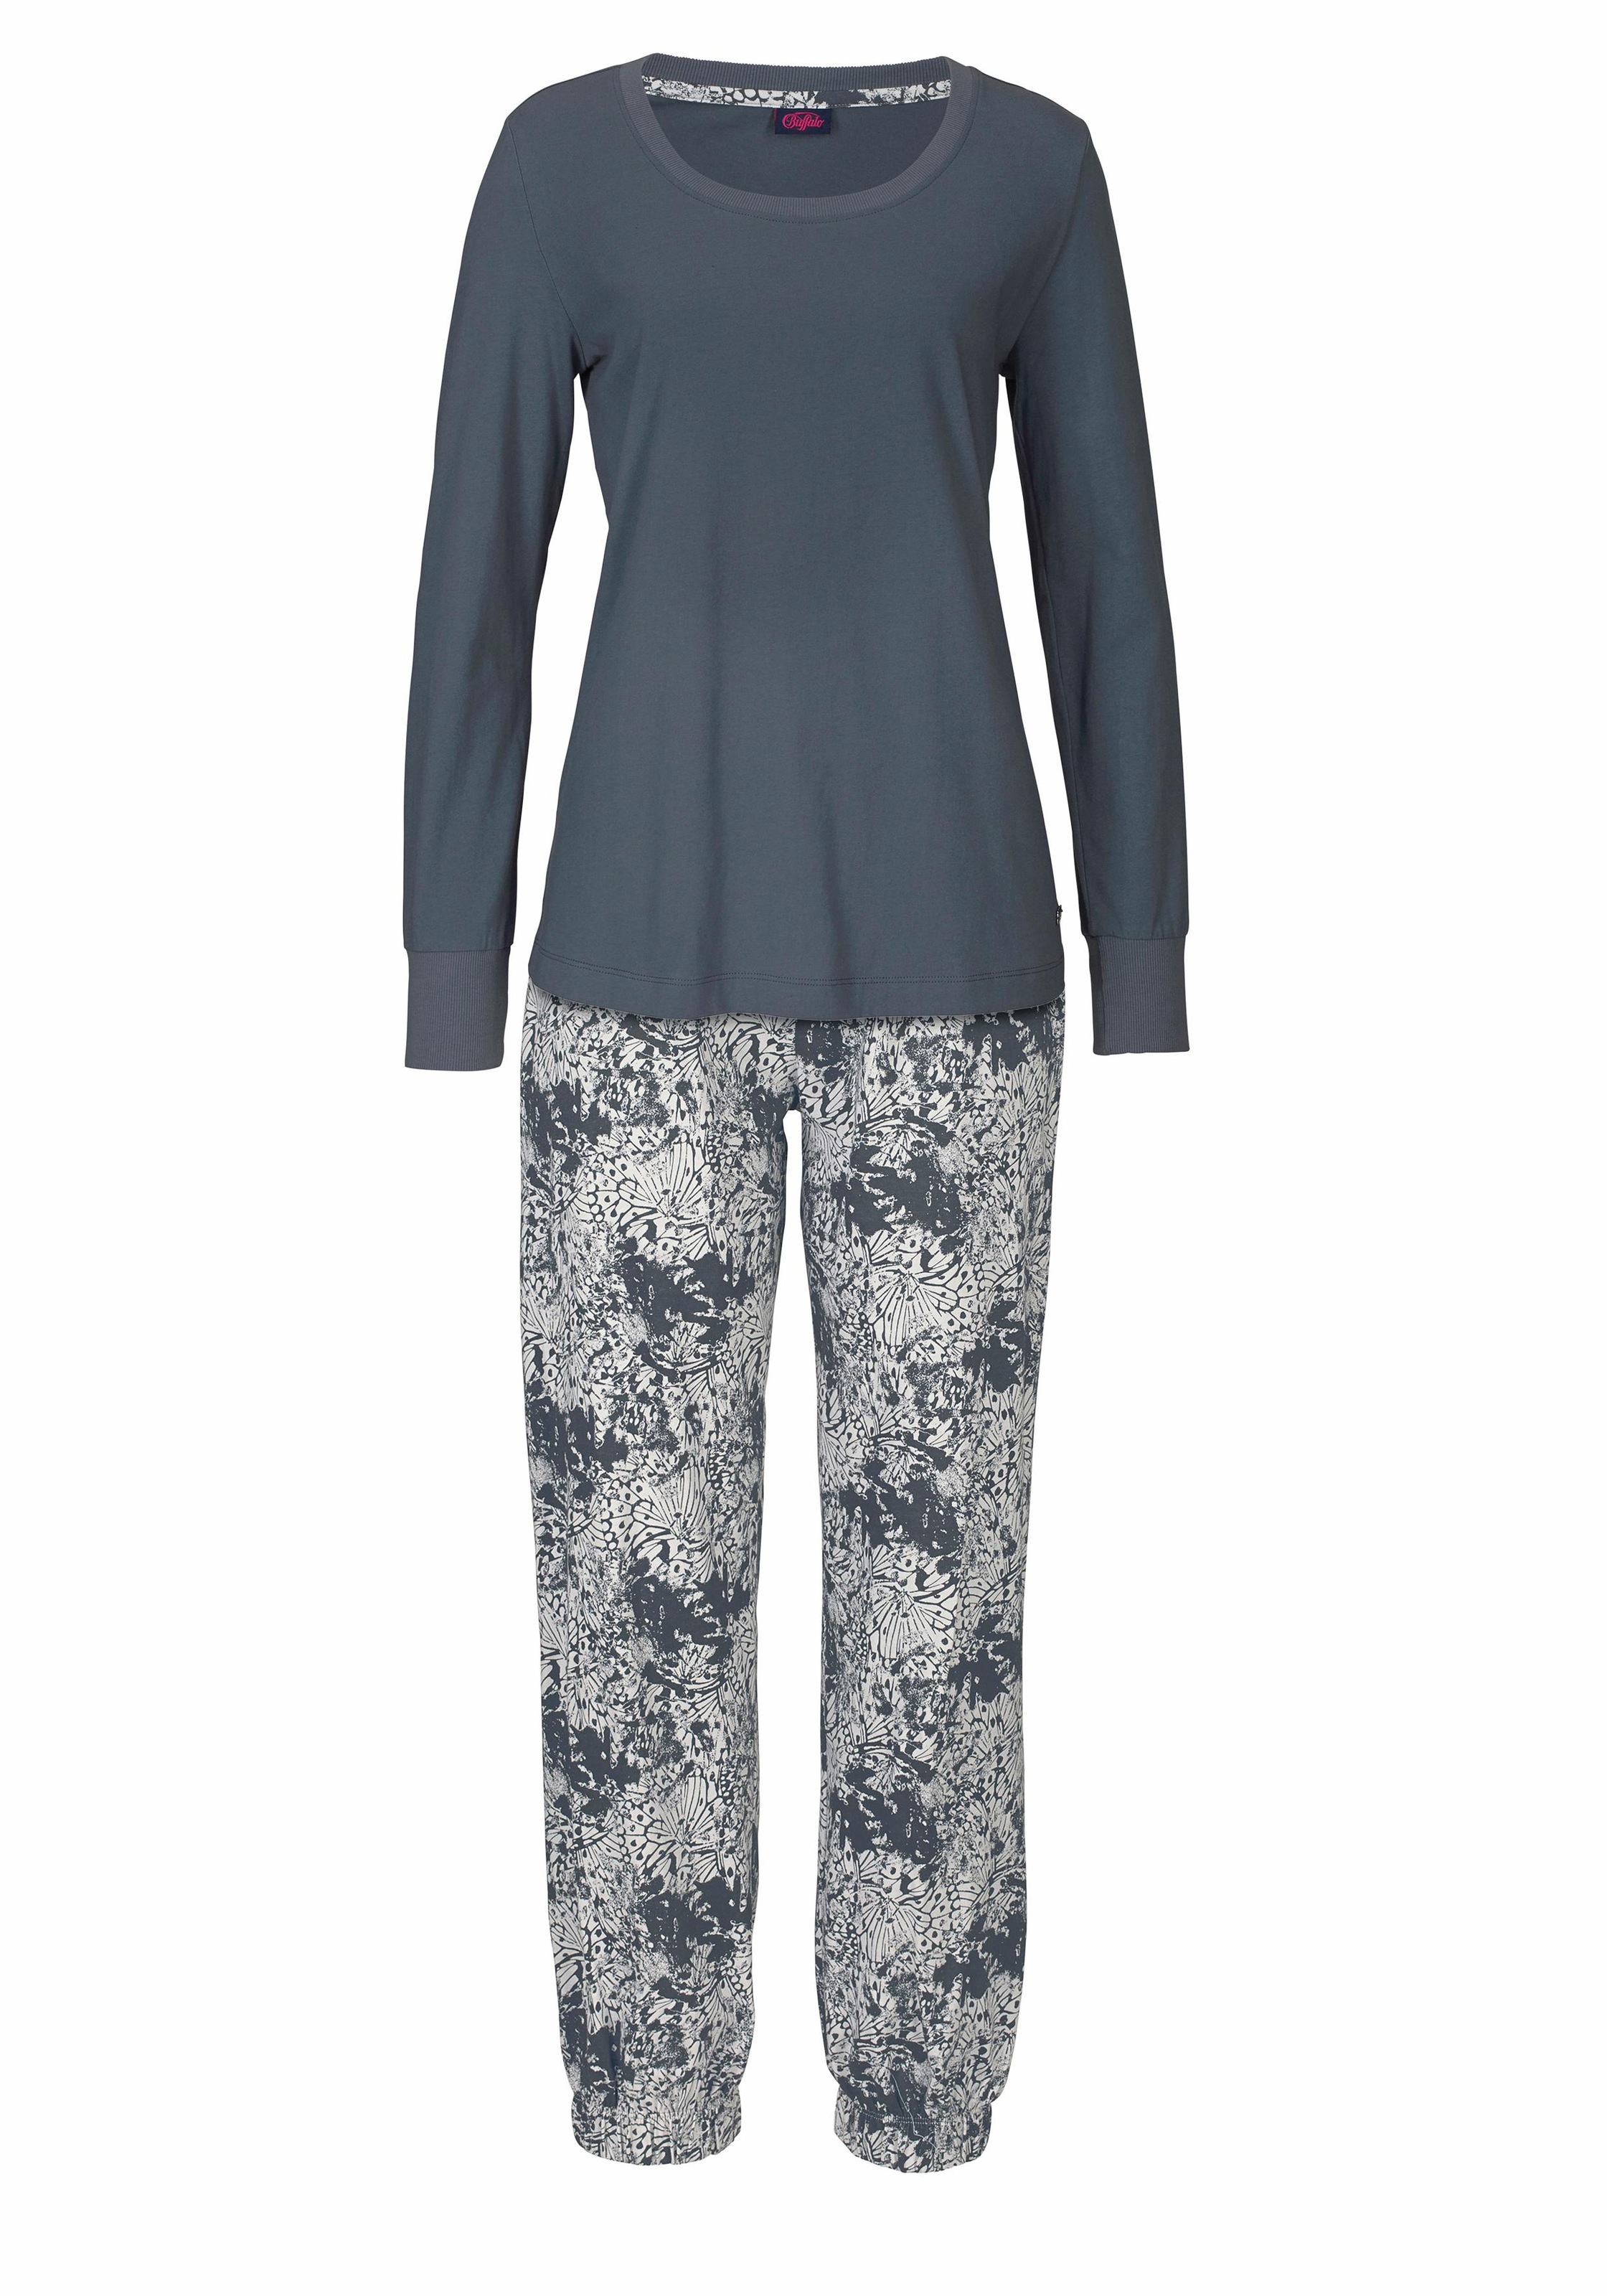 LASCANA Shop Bestelle | Pyjamas Pyjamas online im